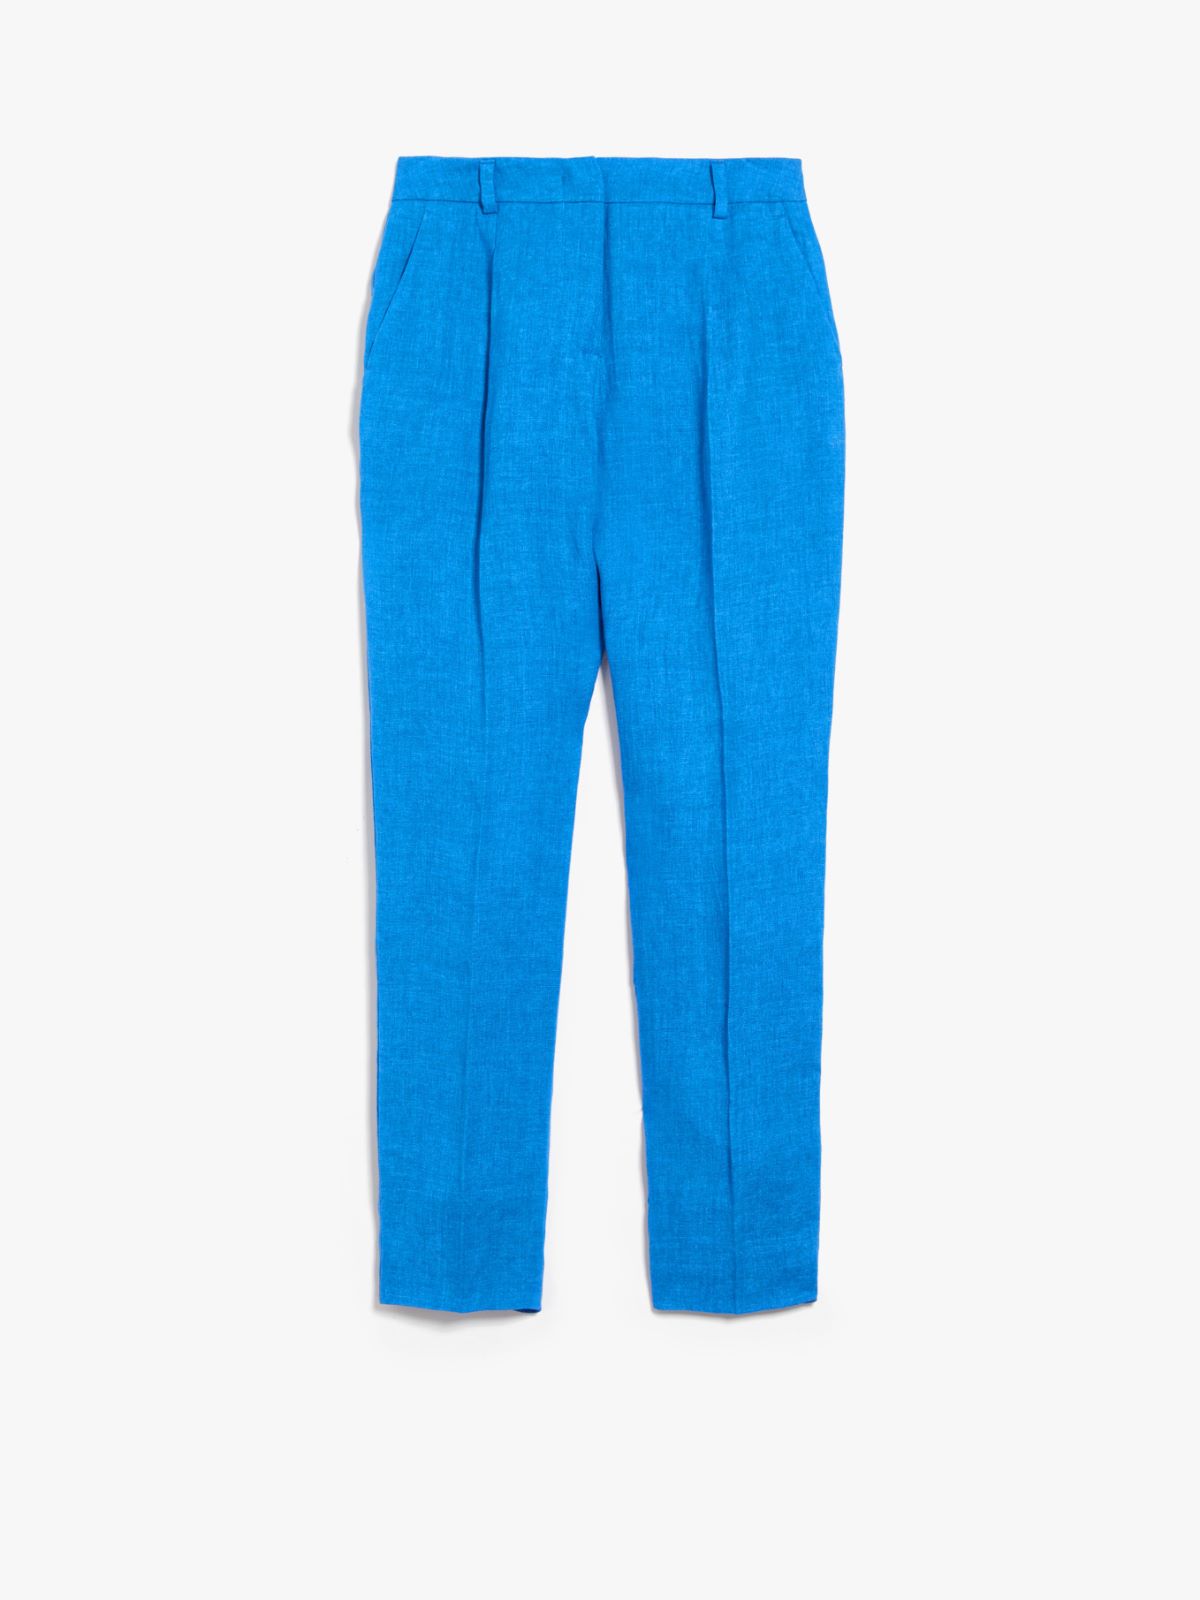 Trousers in linen canvas - CORNFLOWER BLUE - Weekend Max Mara - 5